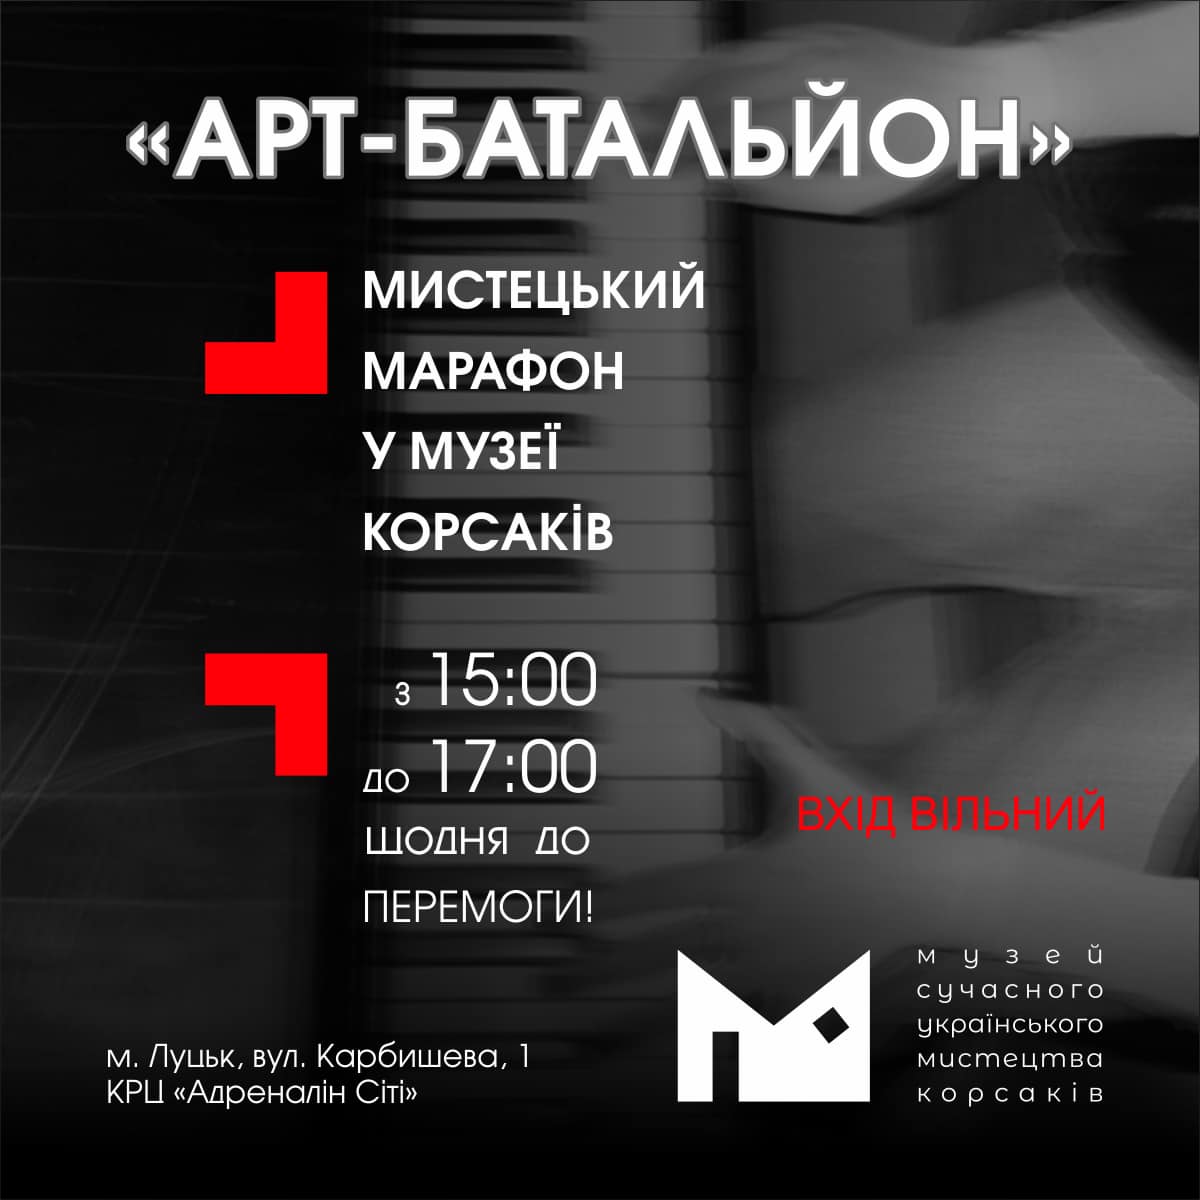 “Kunstbataillon” bei Korsakiw-Museum für moderne ukrainische Kunst!